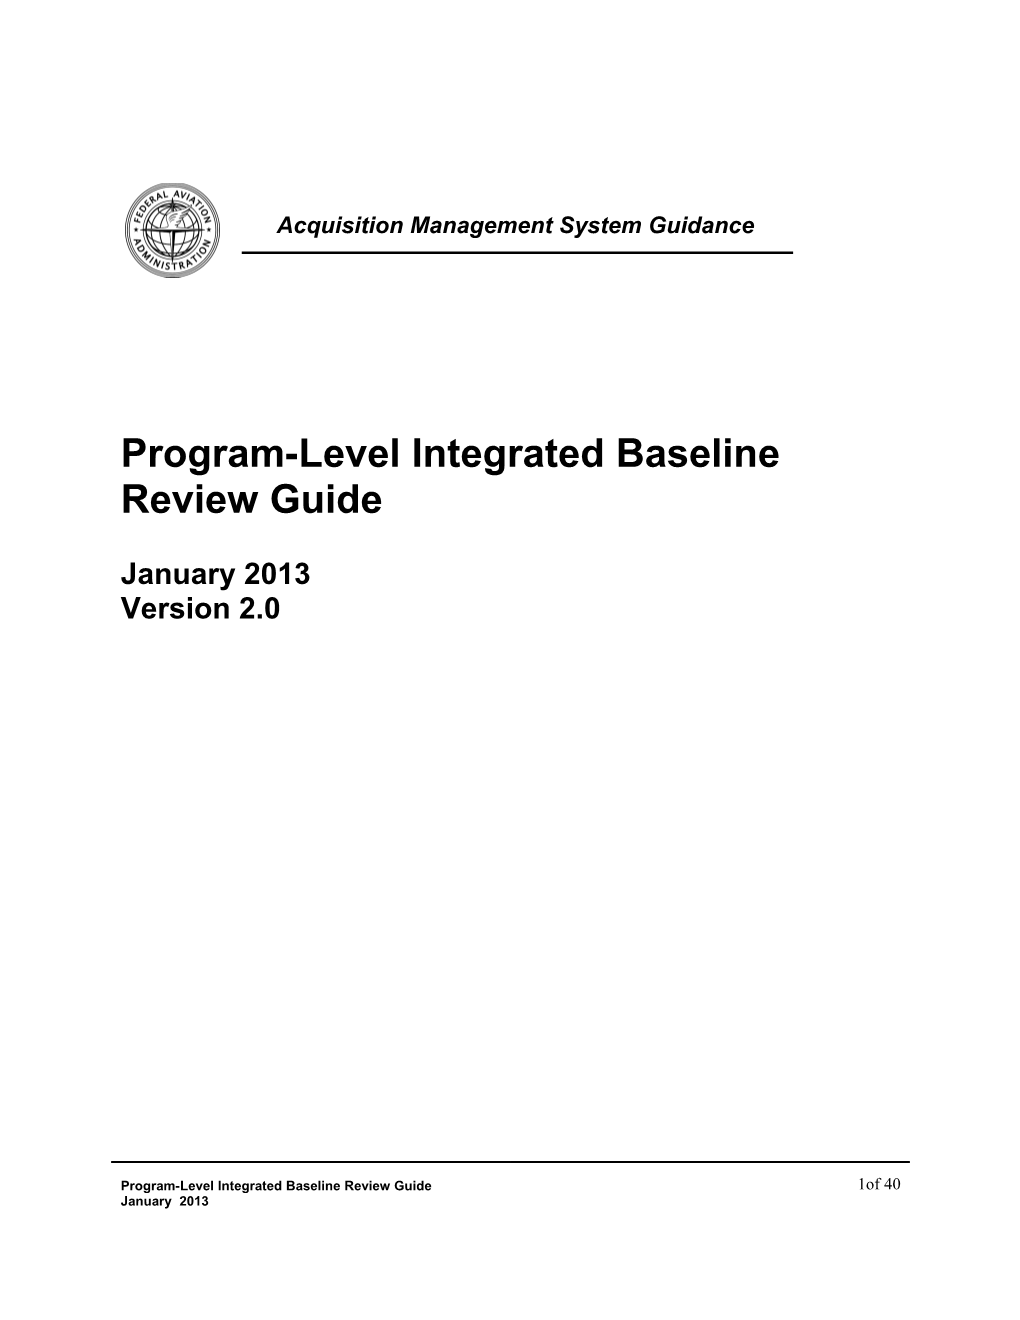 Program-Level Integrated Baseline Review Guide